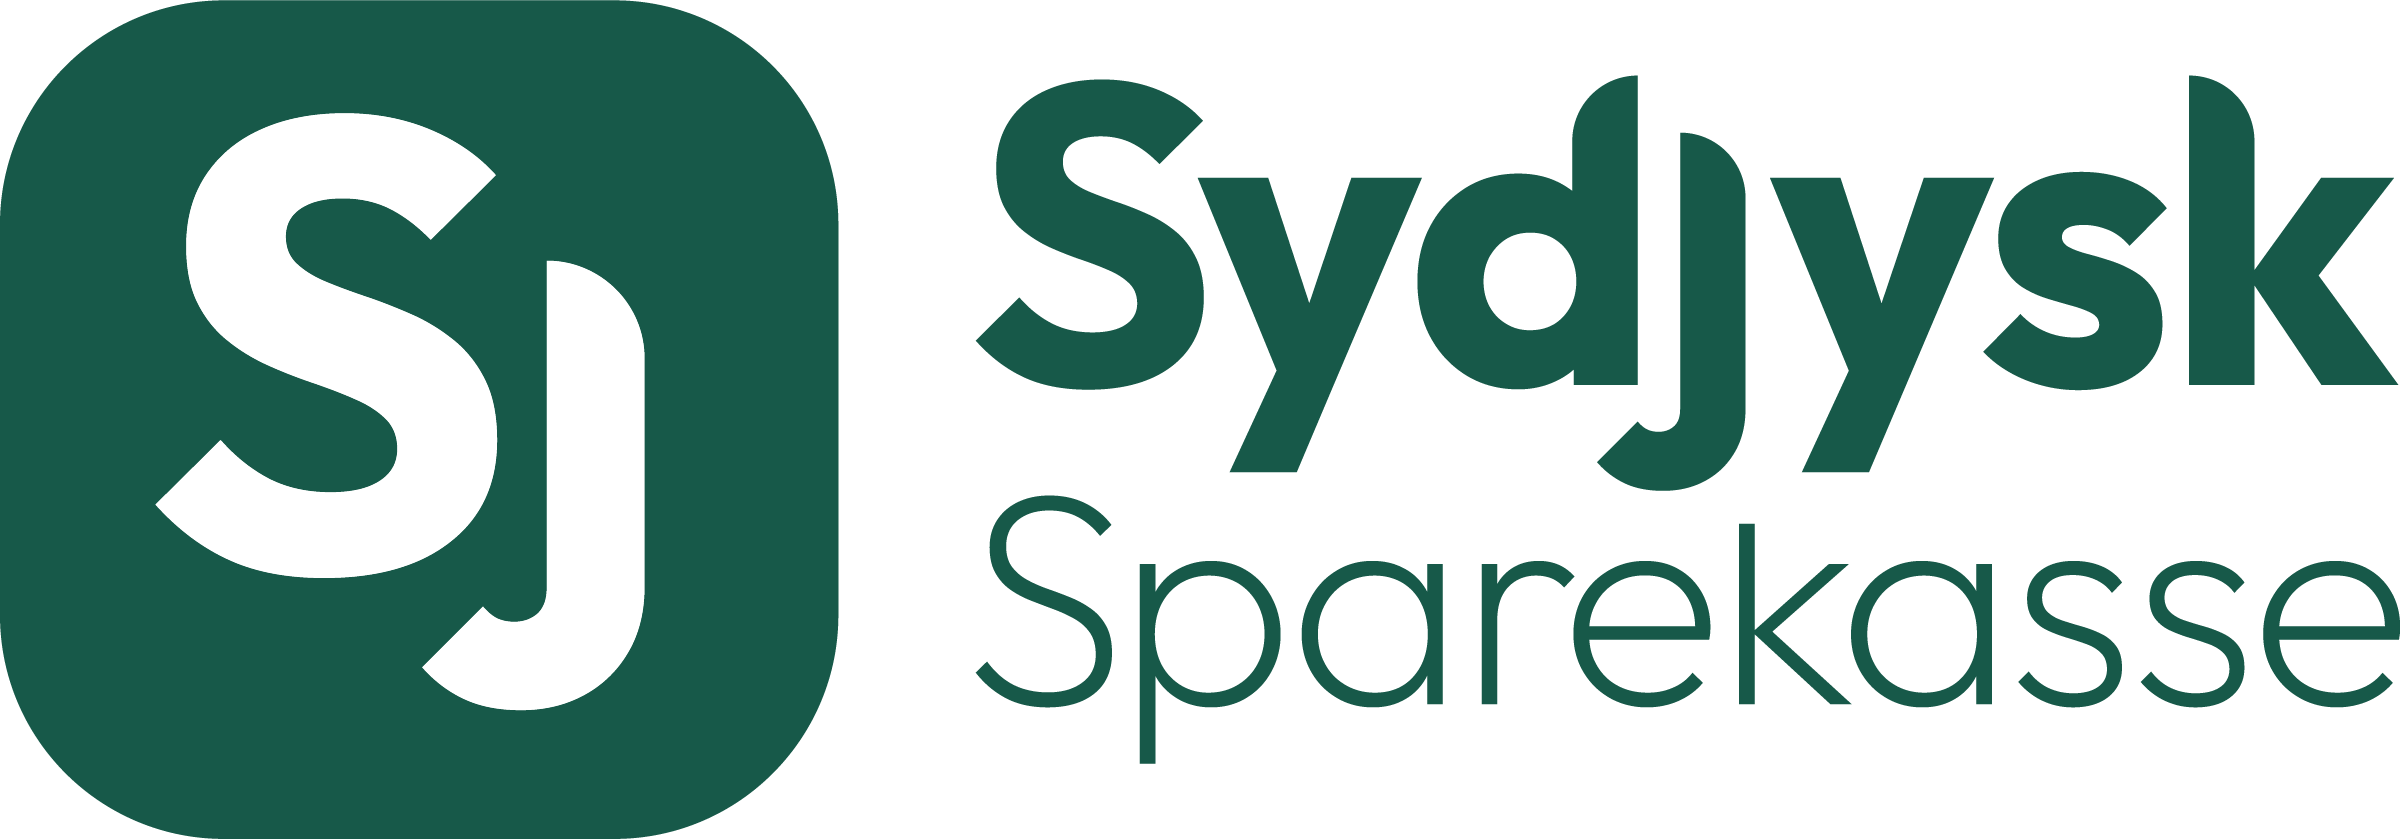 SJSpar_Logo_RGB_Bred_Grøn_Fyld.png